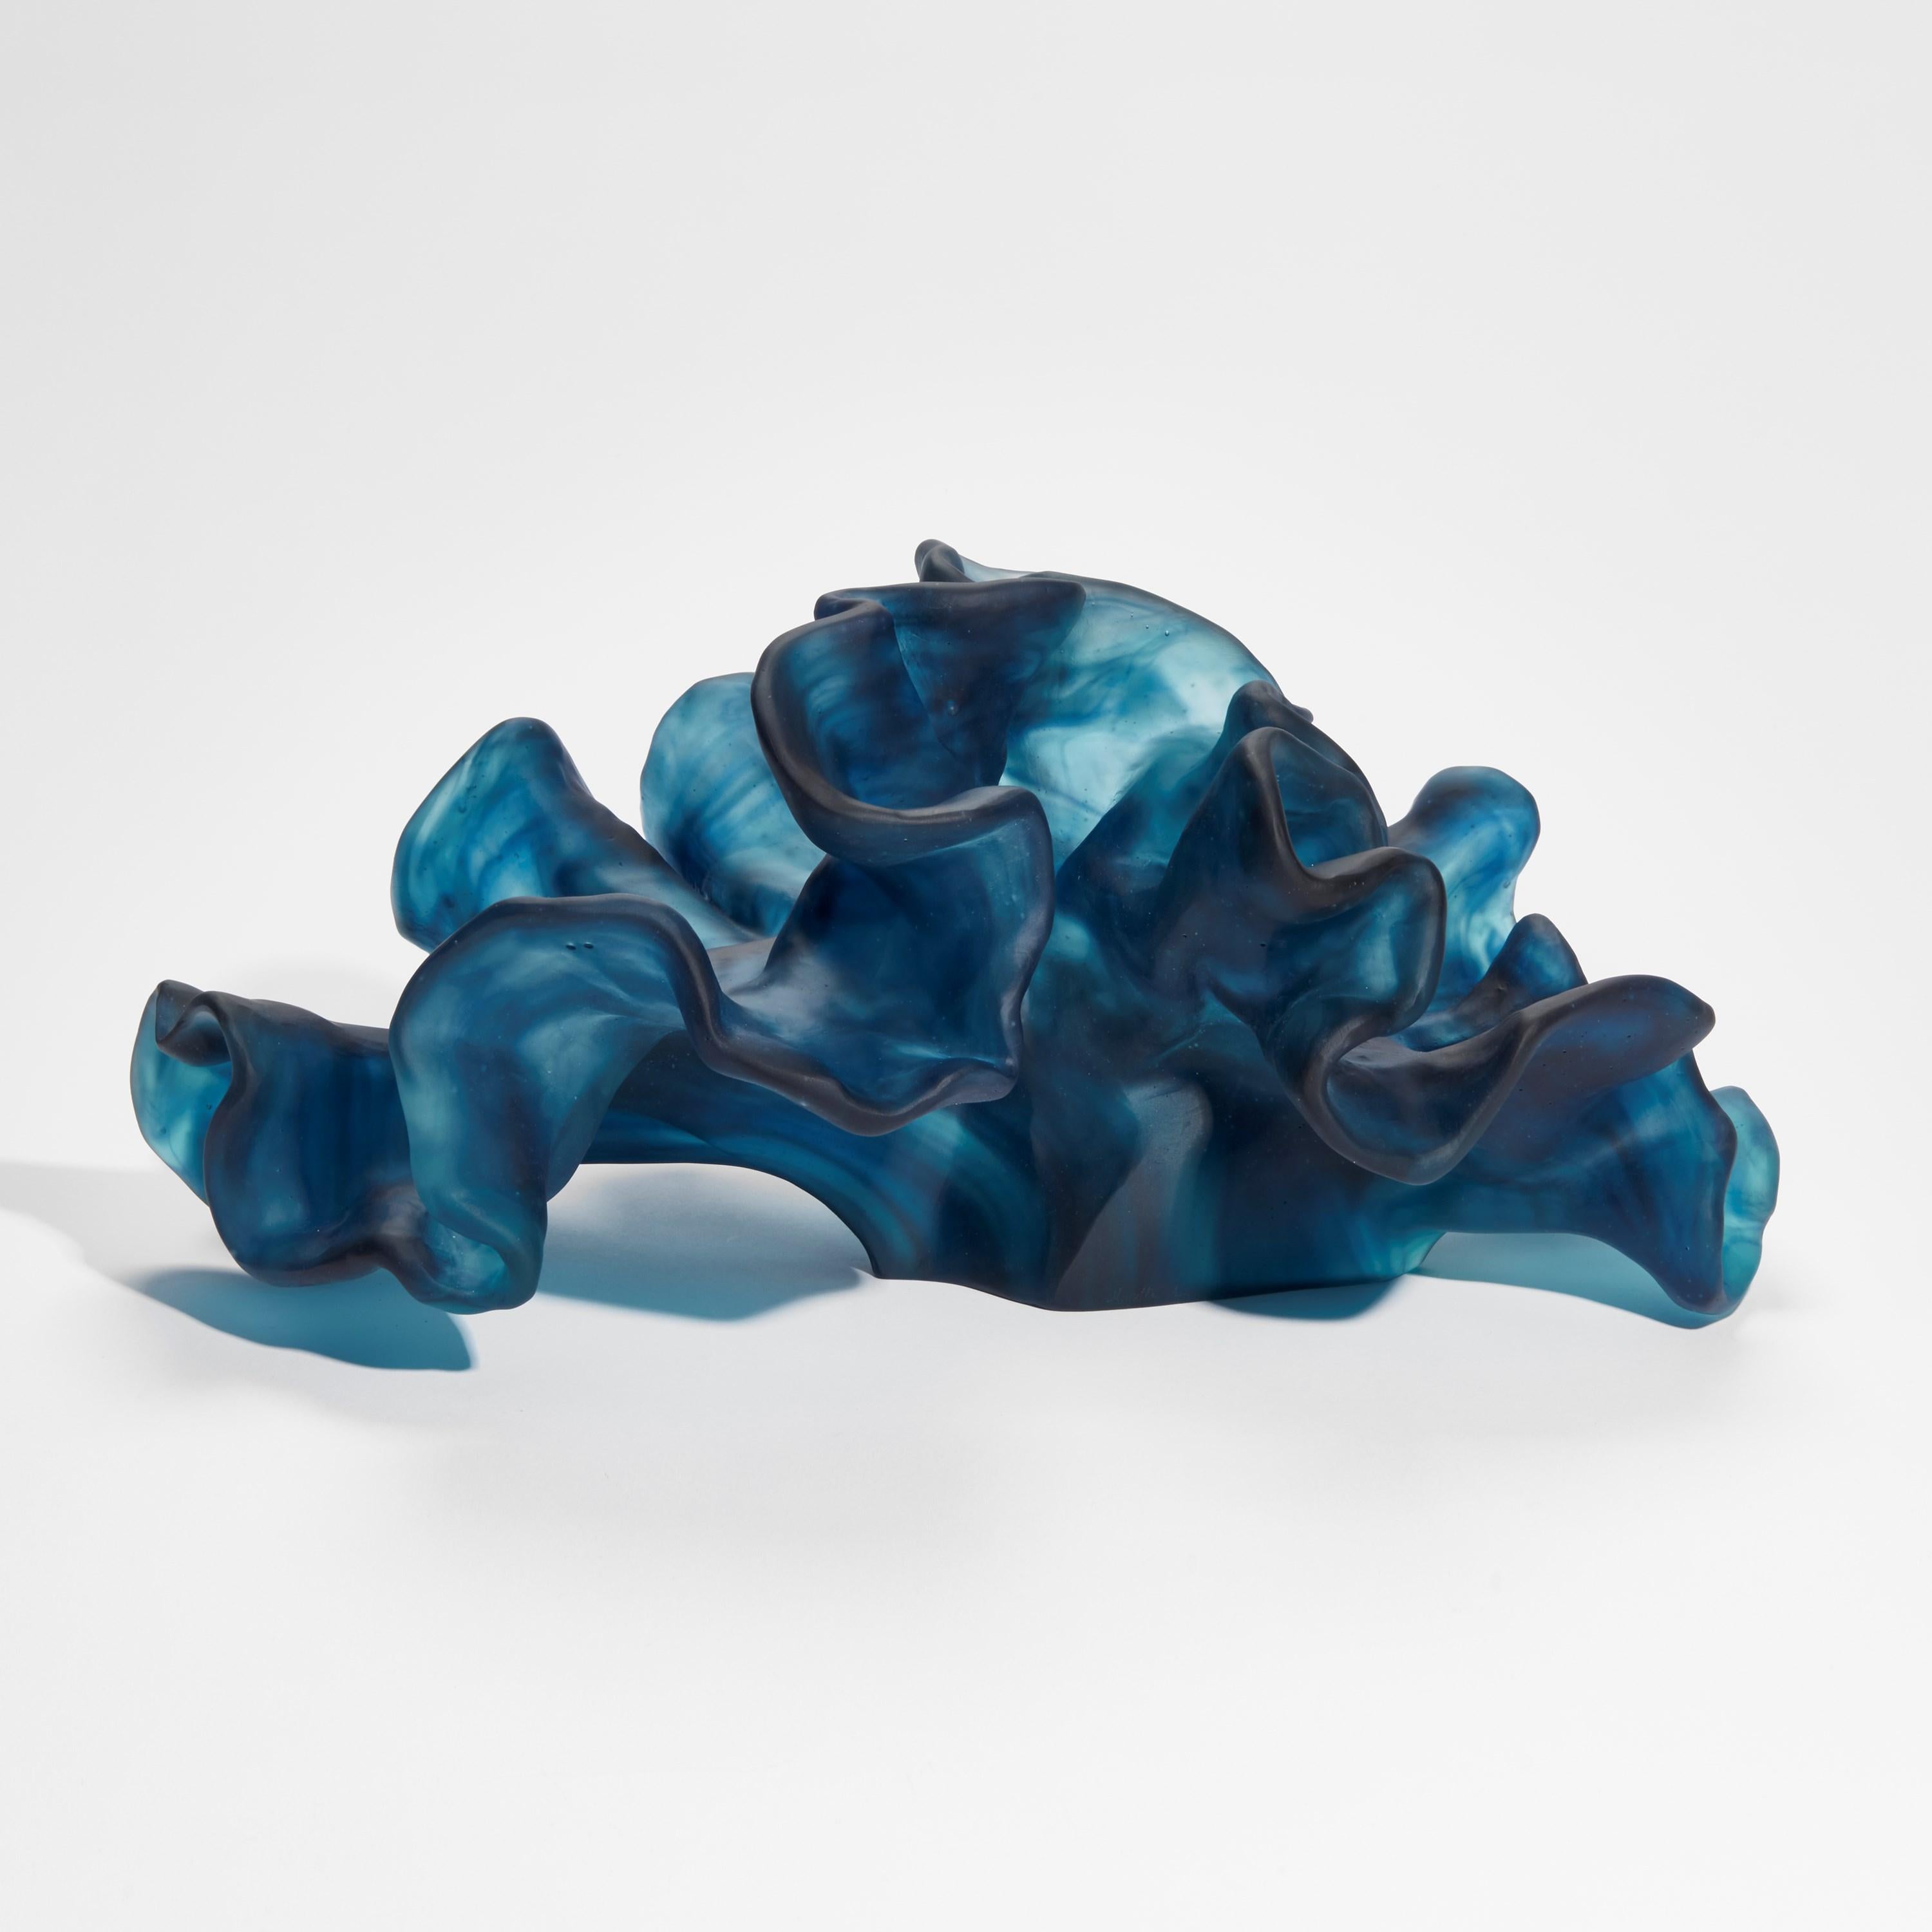 Organic Modern Enduring Essence, a Unique Rich Deep Blue Cast Glass Sculpture by Monette Larsen